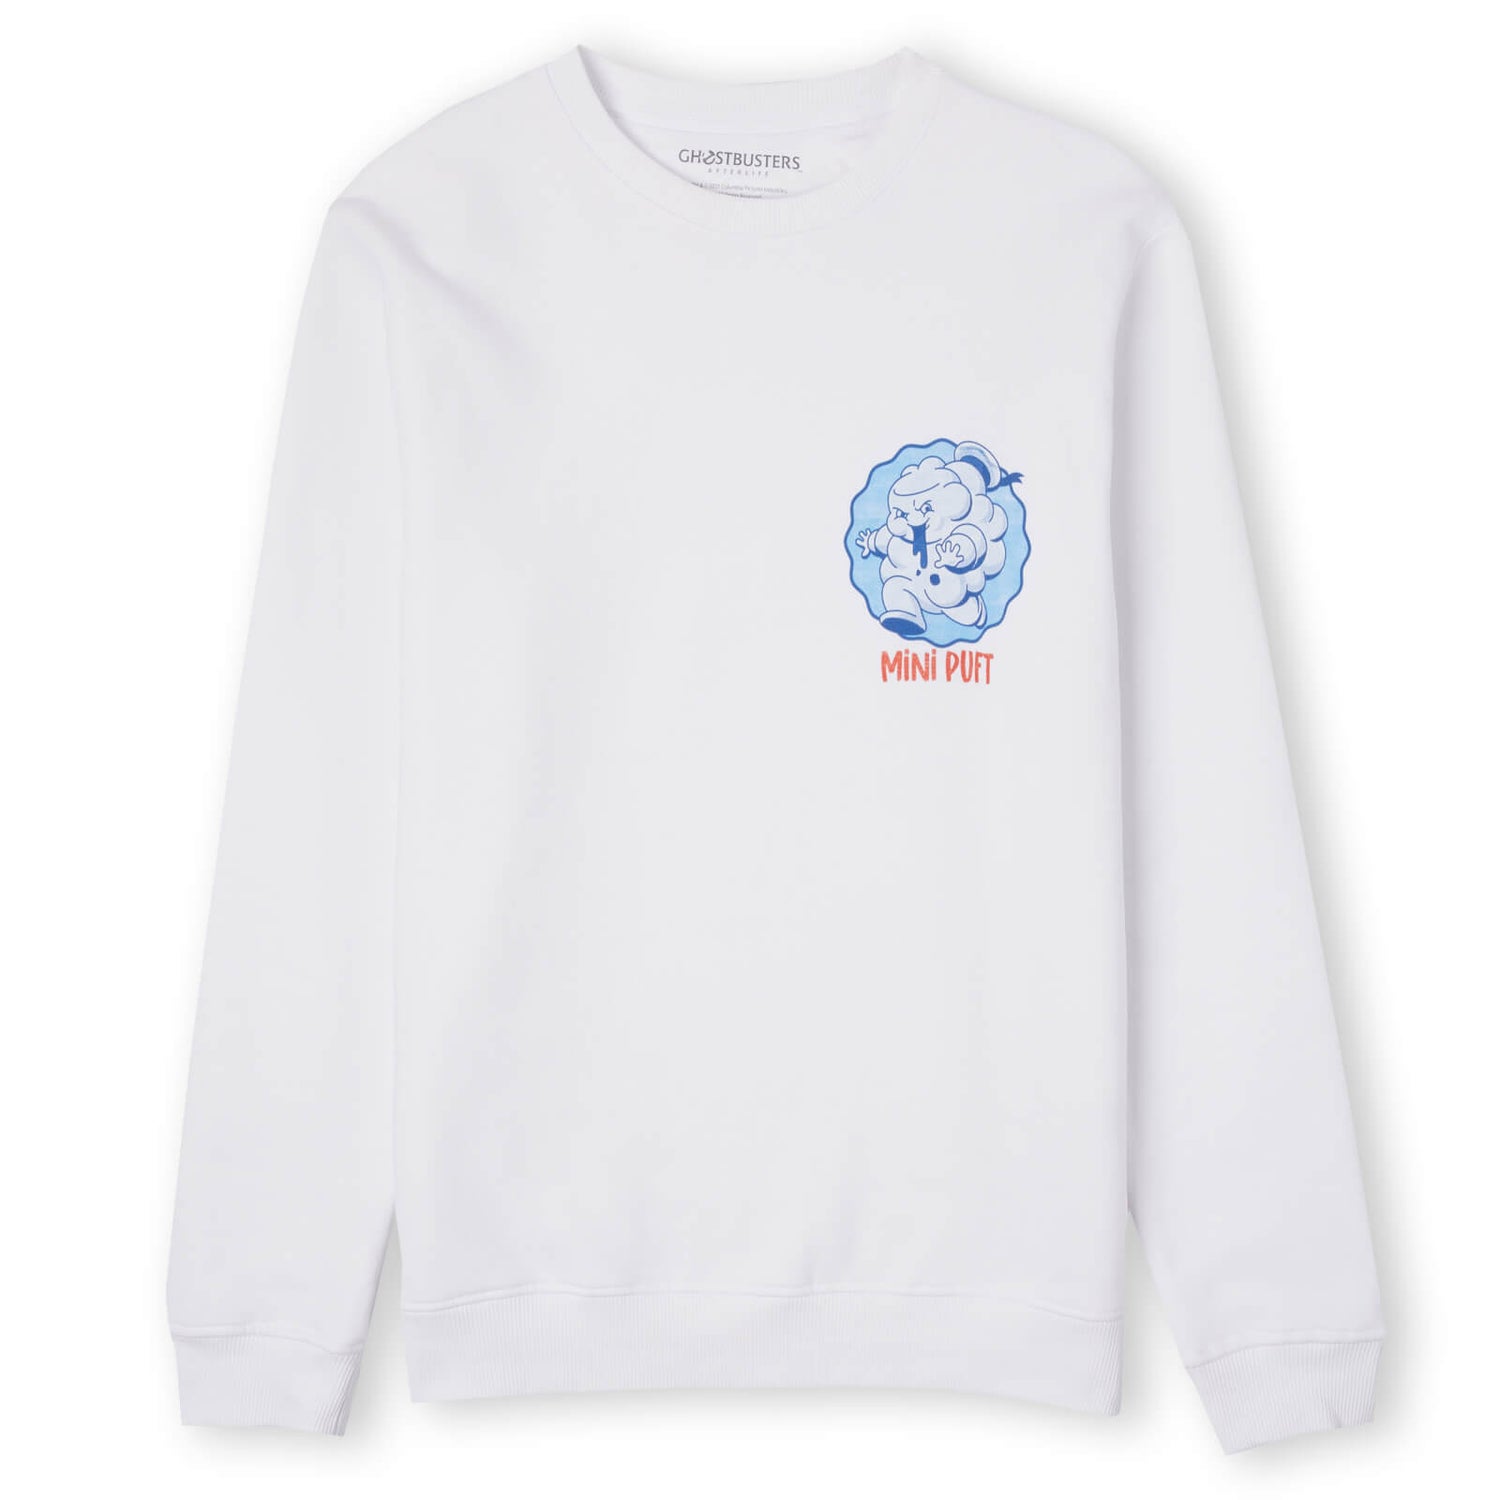 Ghostbusters Mini Puft Unisex Sweatshirt - White